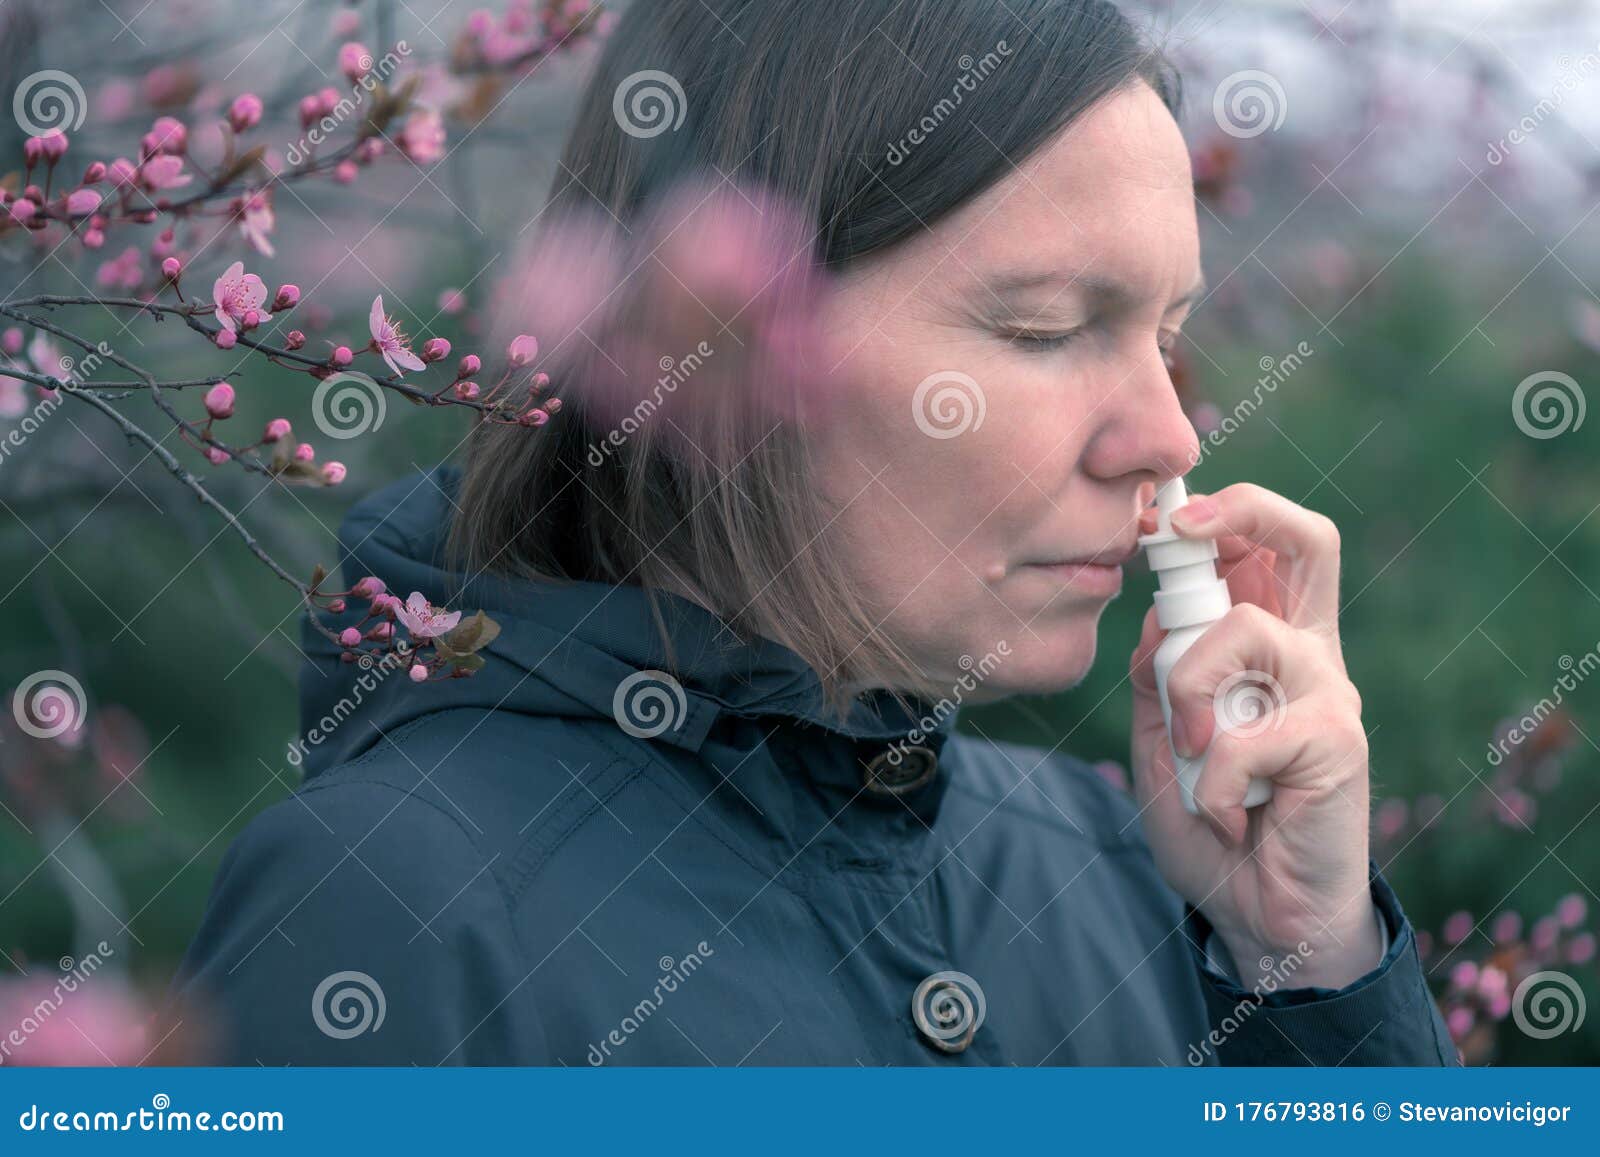 woman using nasal spray outdoors